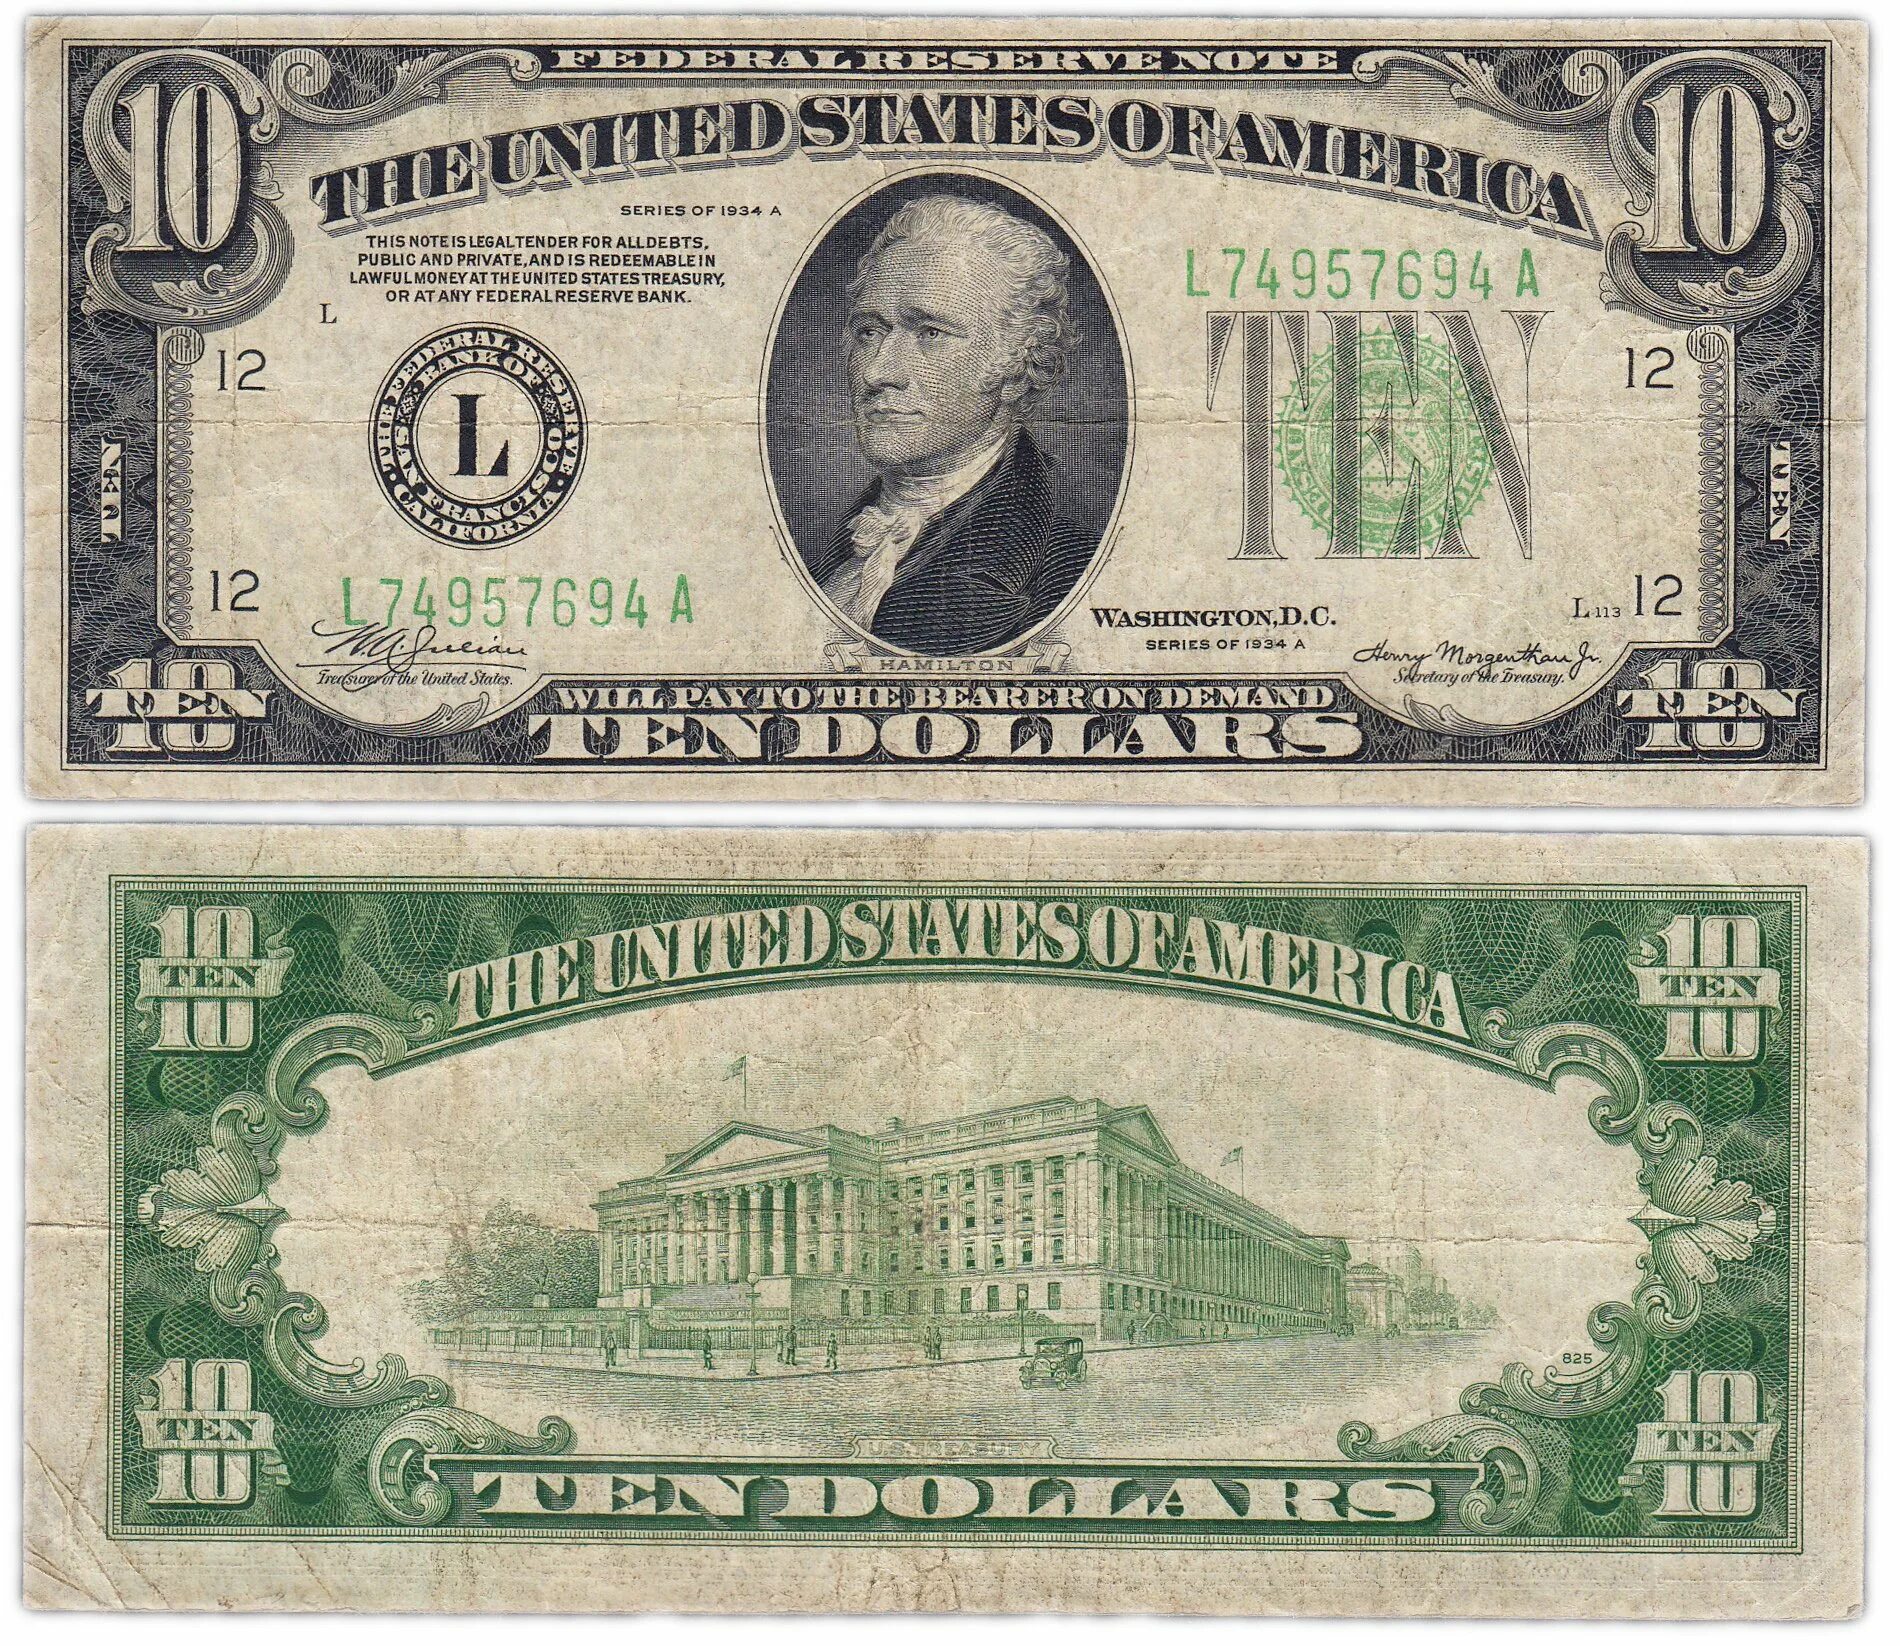 Доллар ис. Доллар США. Доллар купюра. Изображение долларовых купюр. Купюры США.